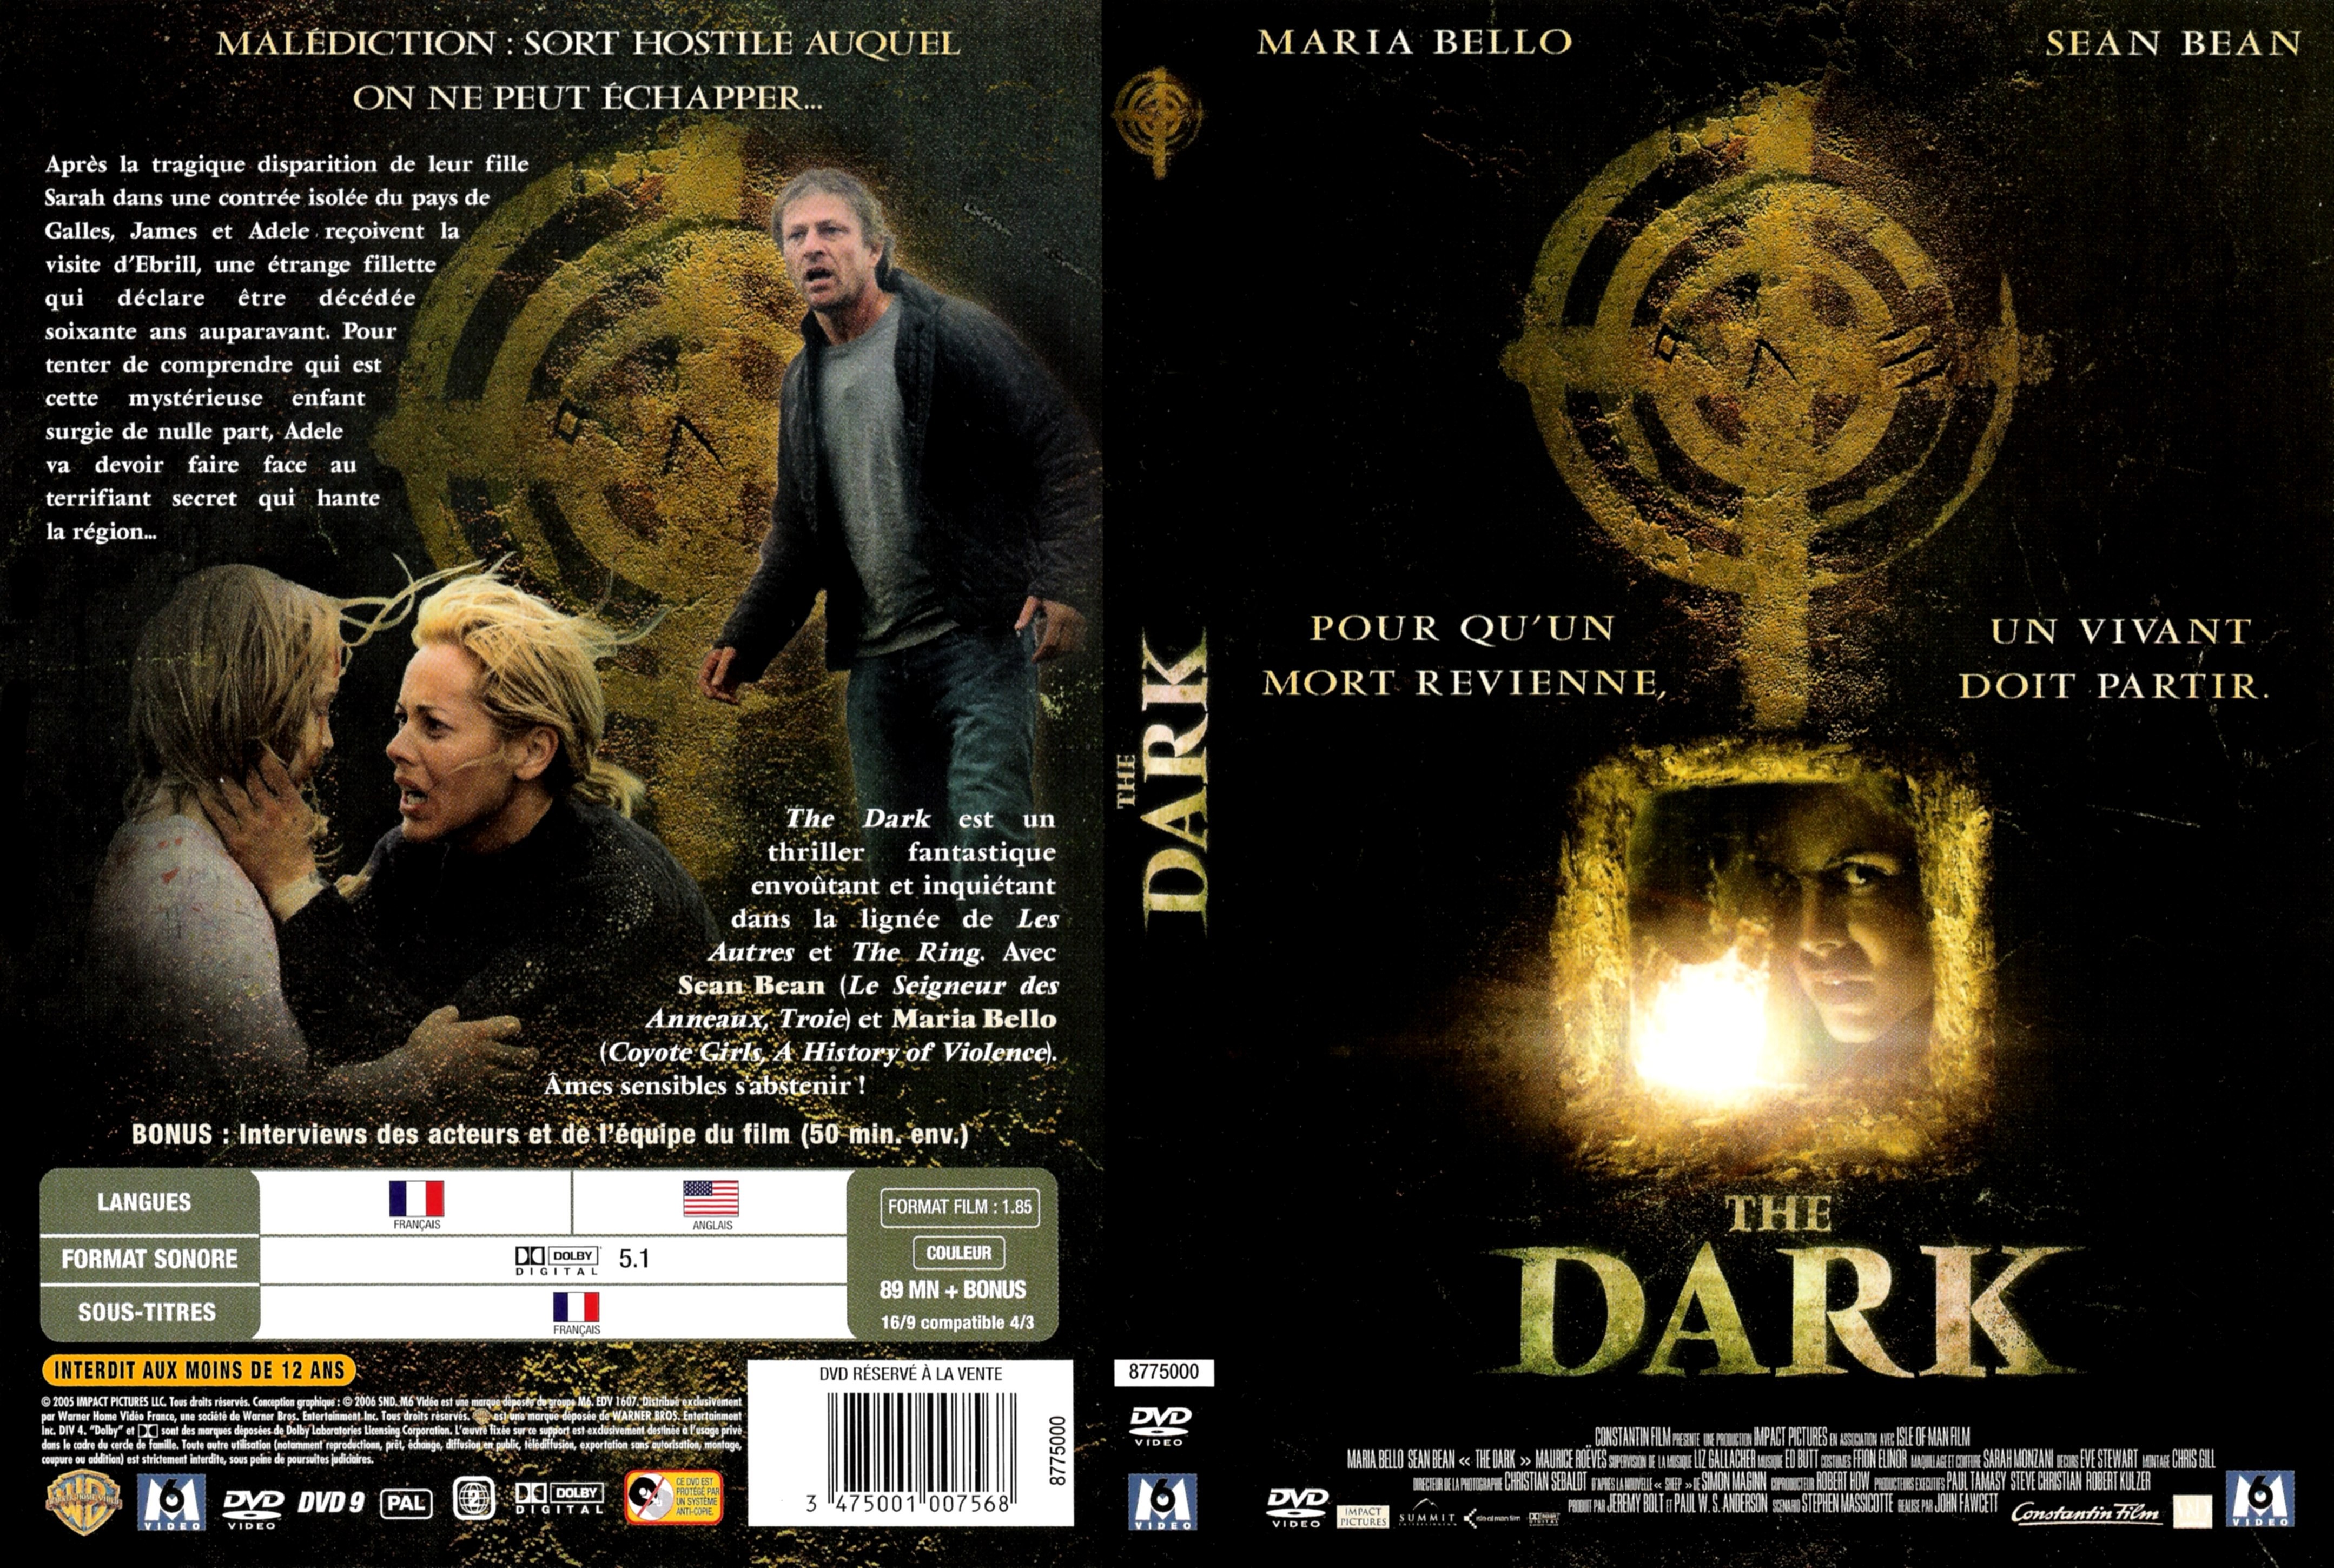 Jaquette DVD The dark